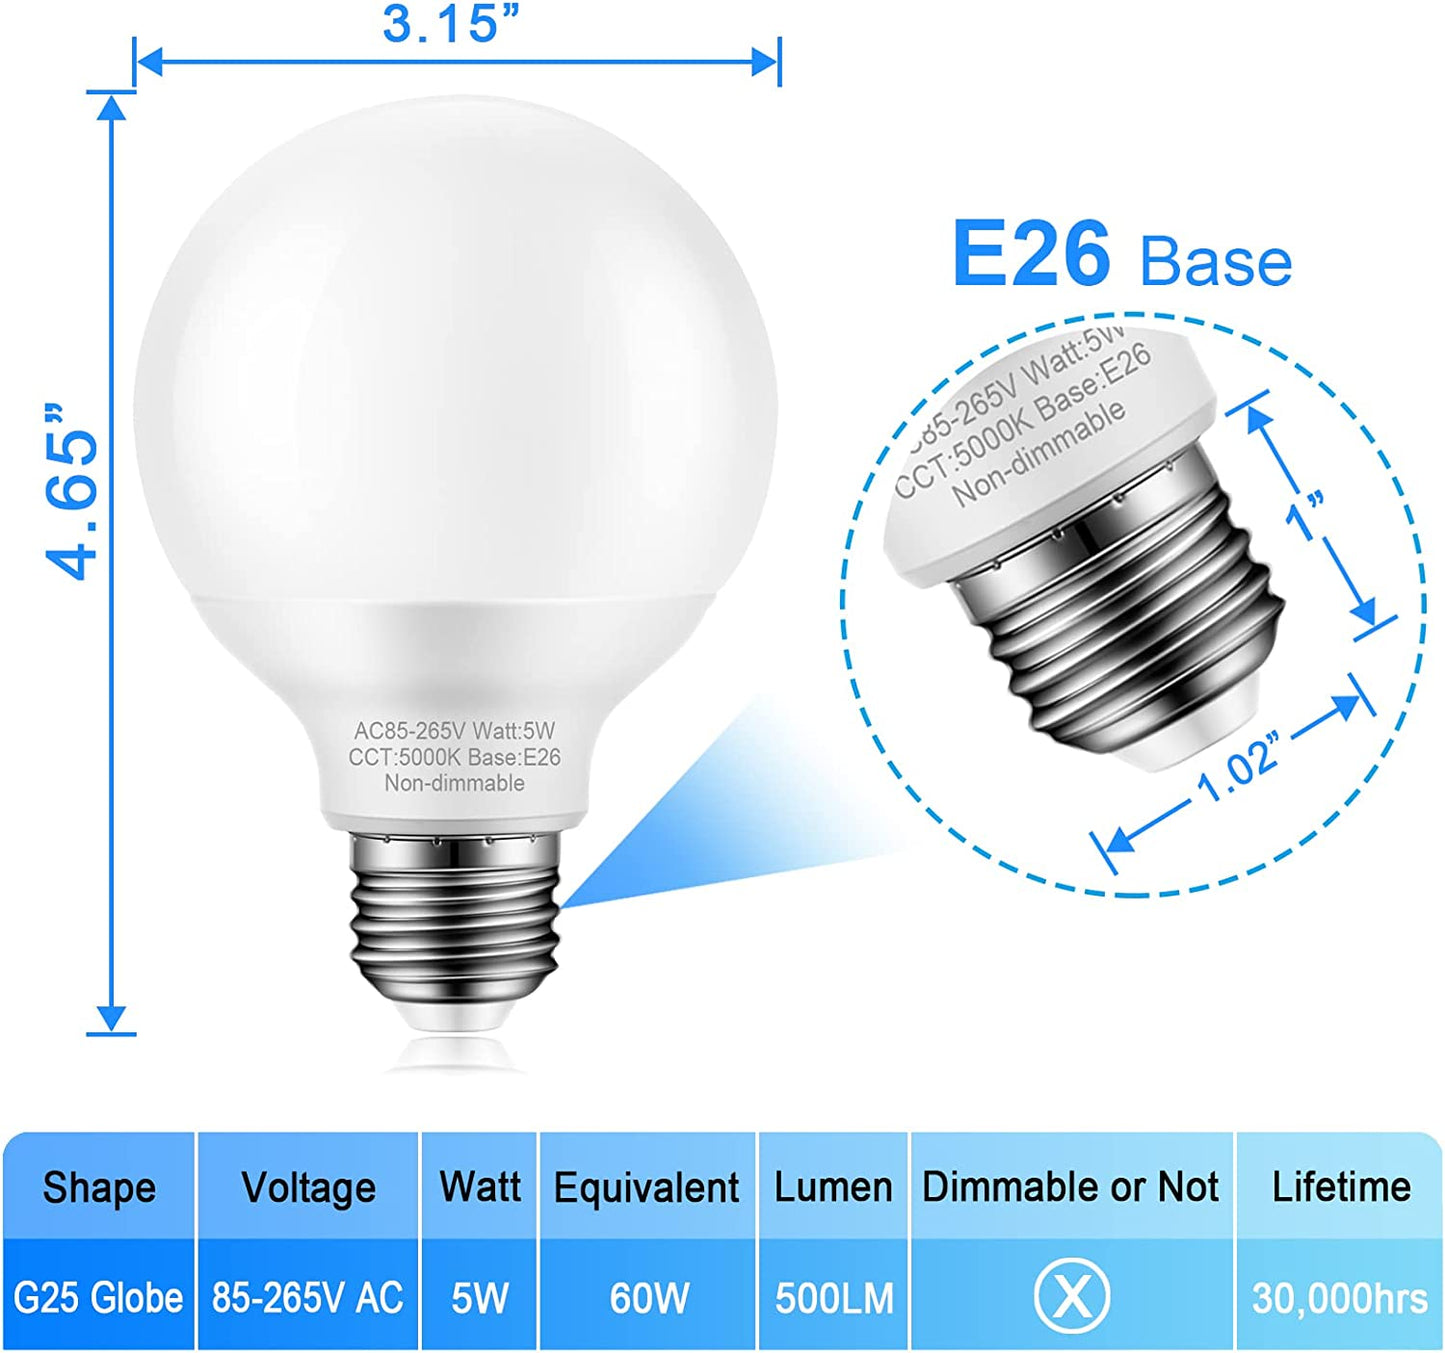 8-Pack Bathroom Light Bulbs, 60 watt Equivalent, Daylight G25 LED Globe Light Bulbs for Bathroom Vanity, E26 Medium Base, 5000K Round Light Bulb Over Mirror, Non-dimmable